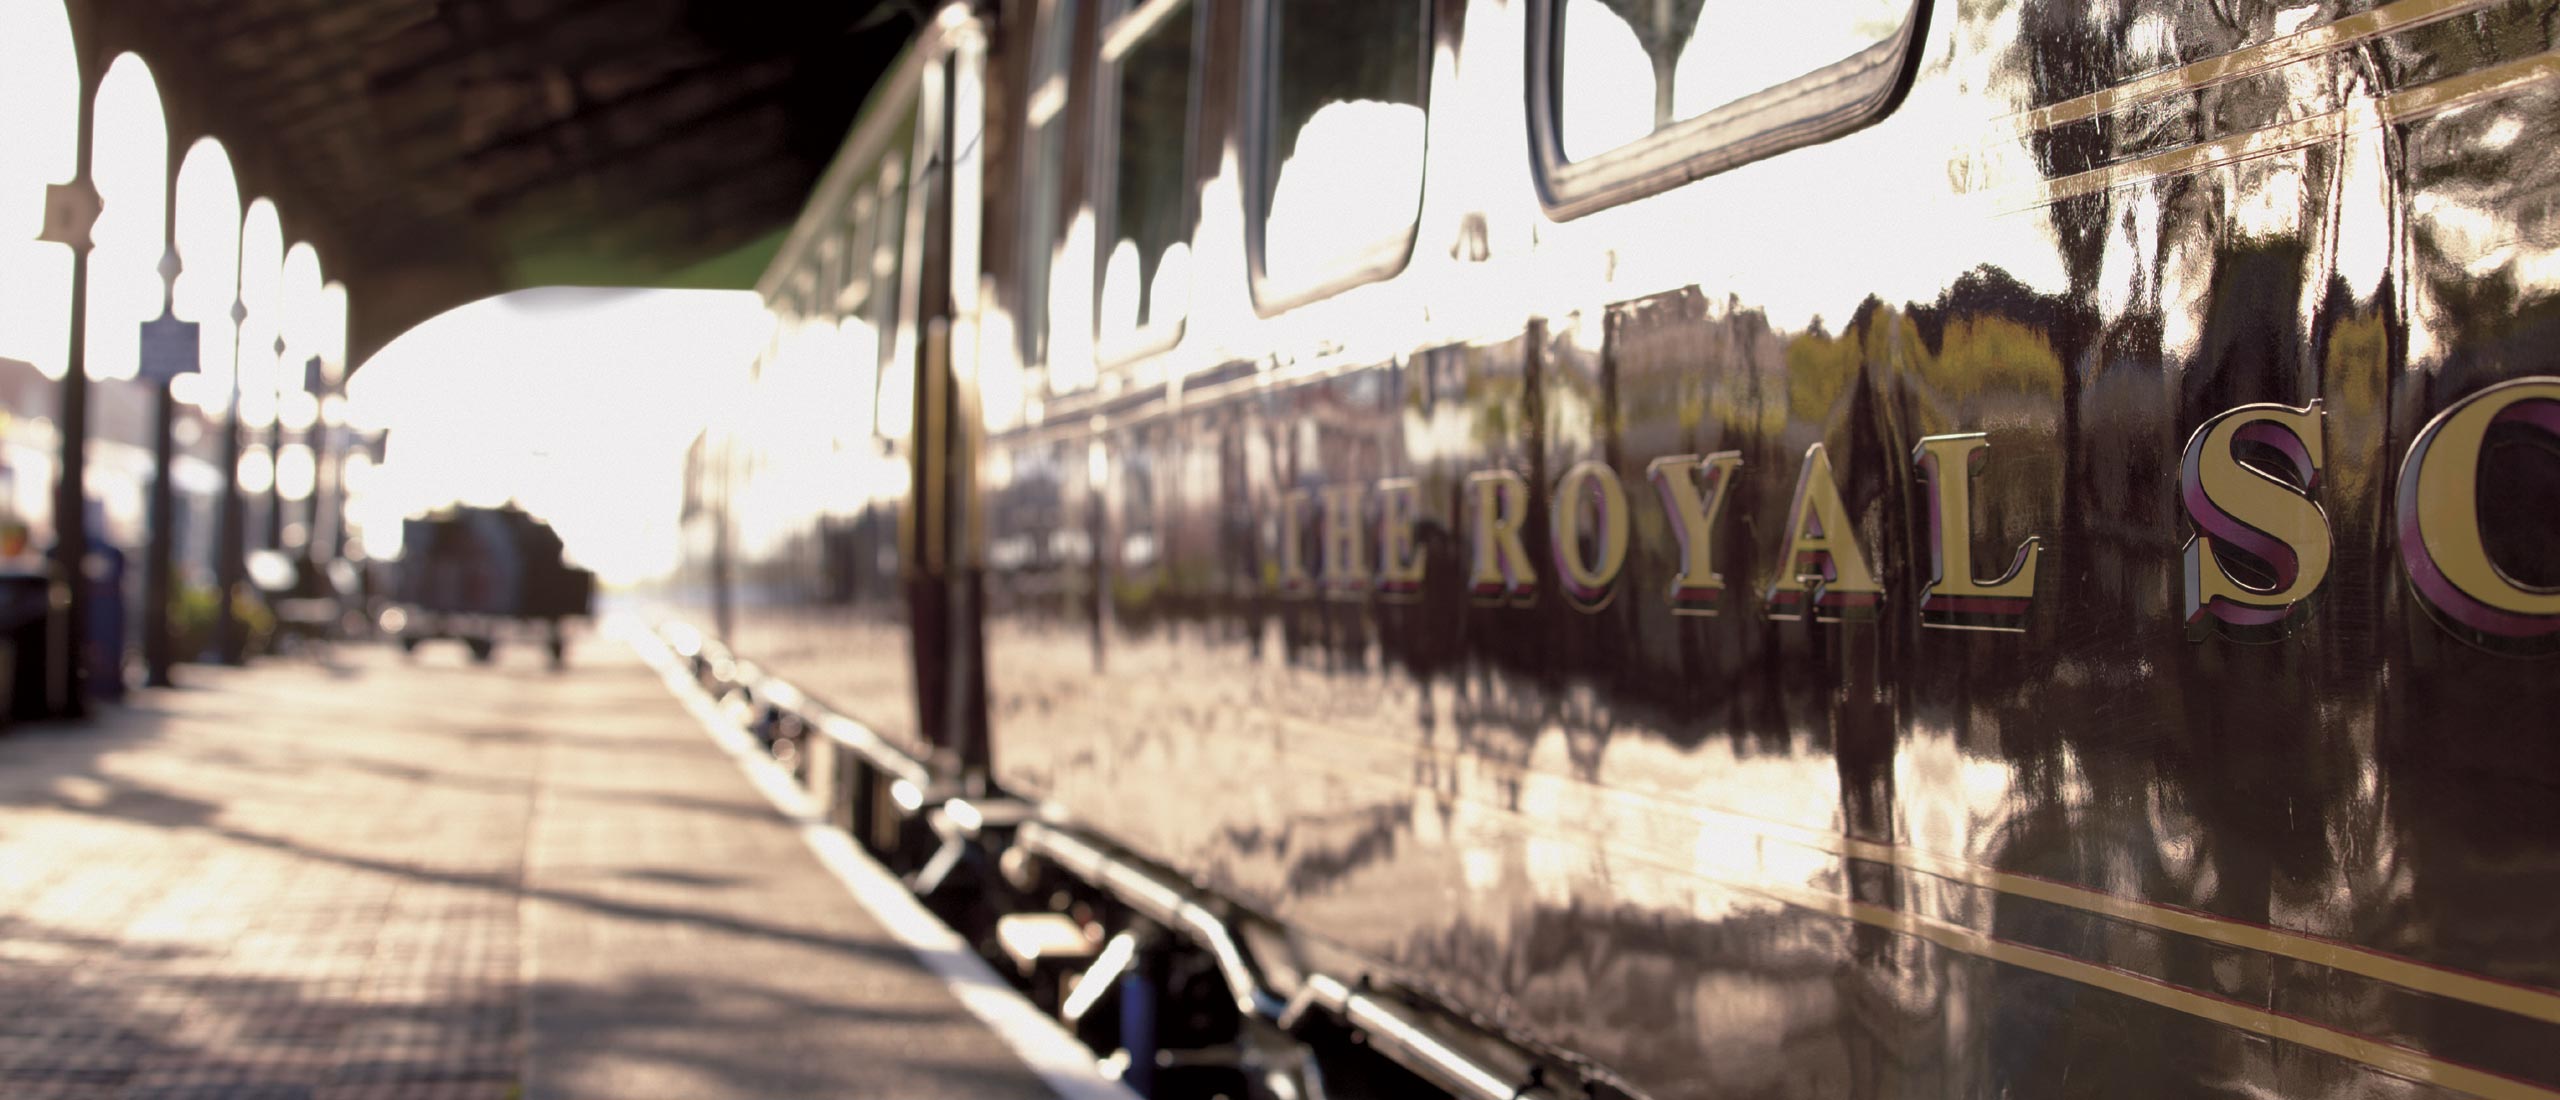 Belmond Royal Scotsman Luxury Train Reservations